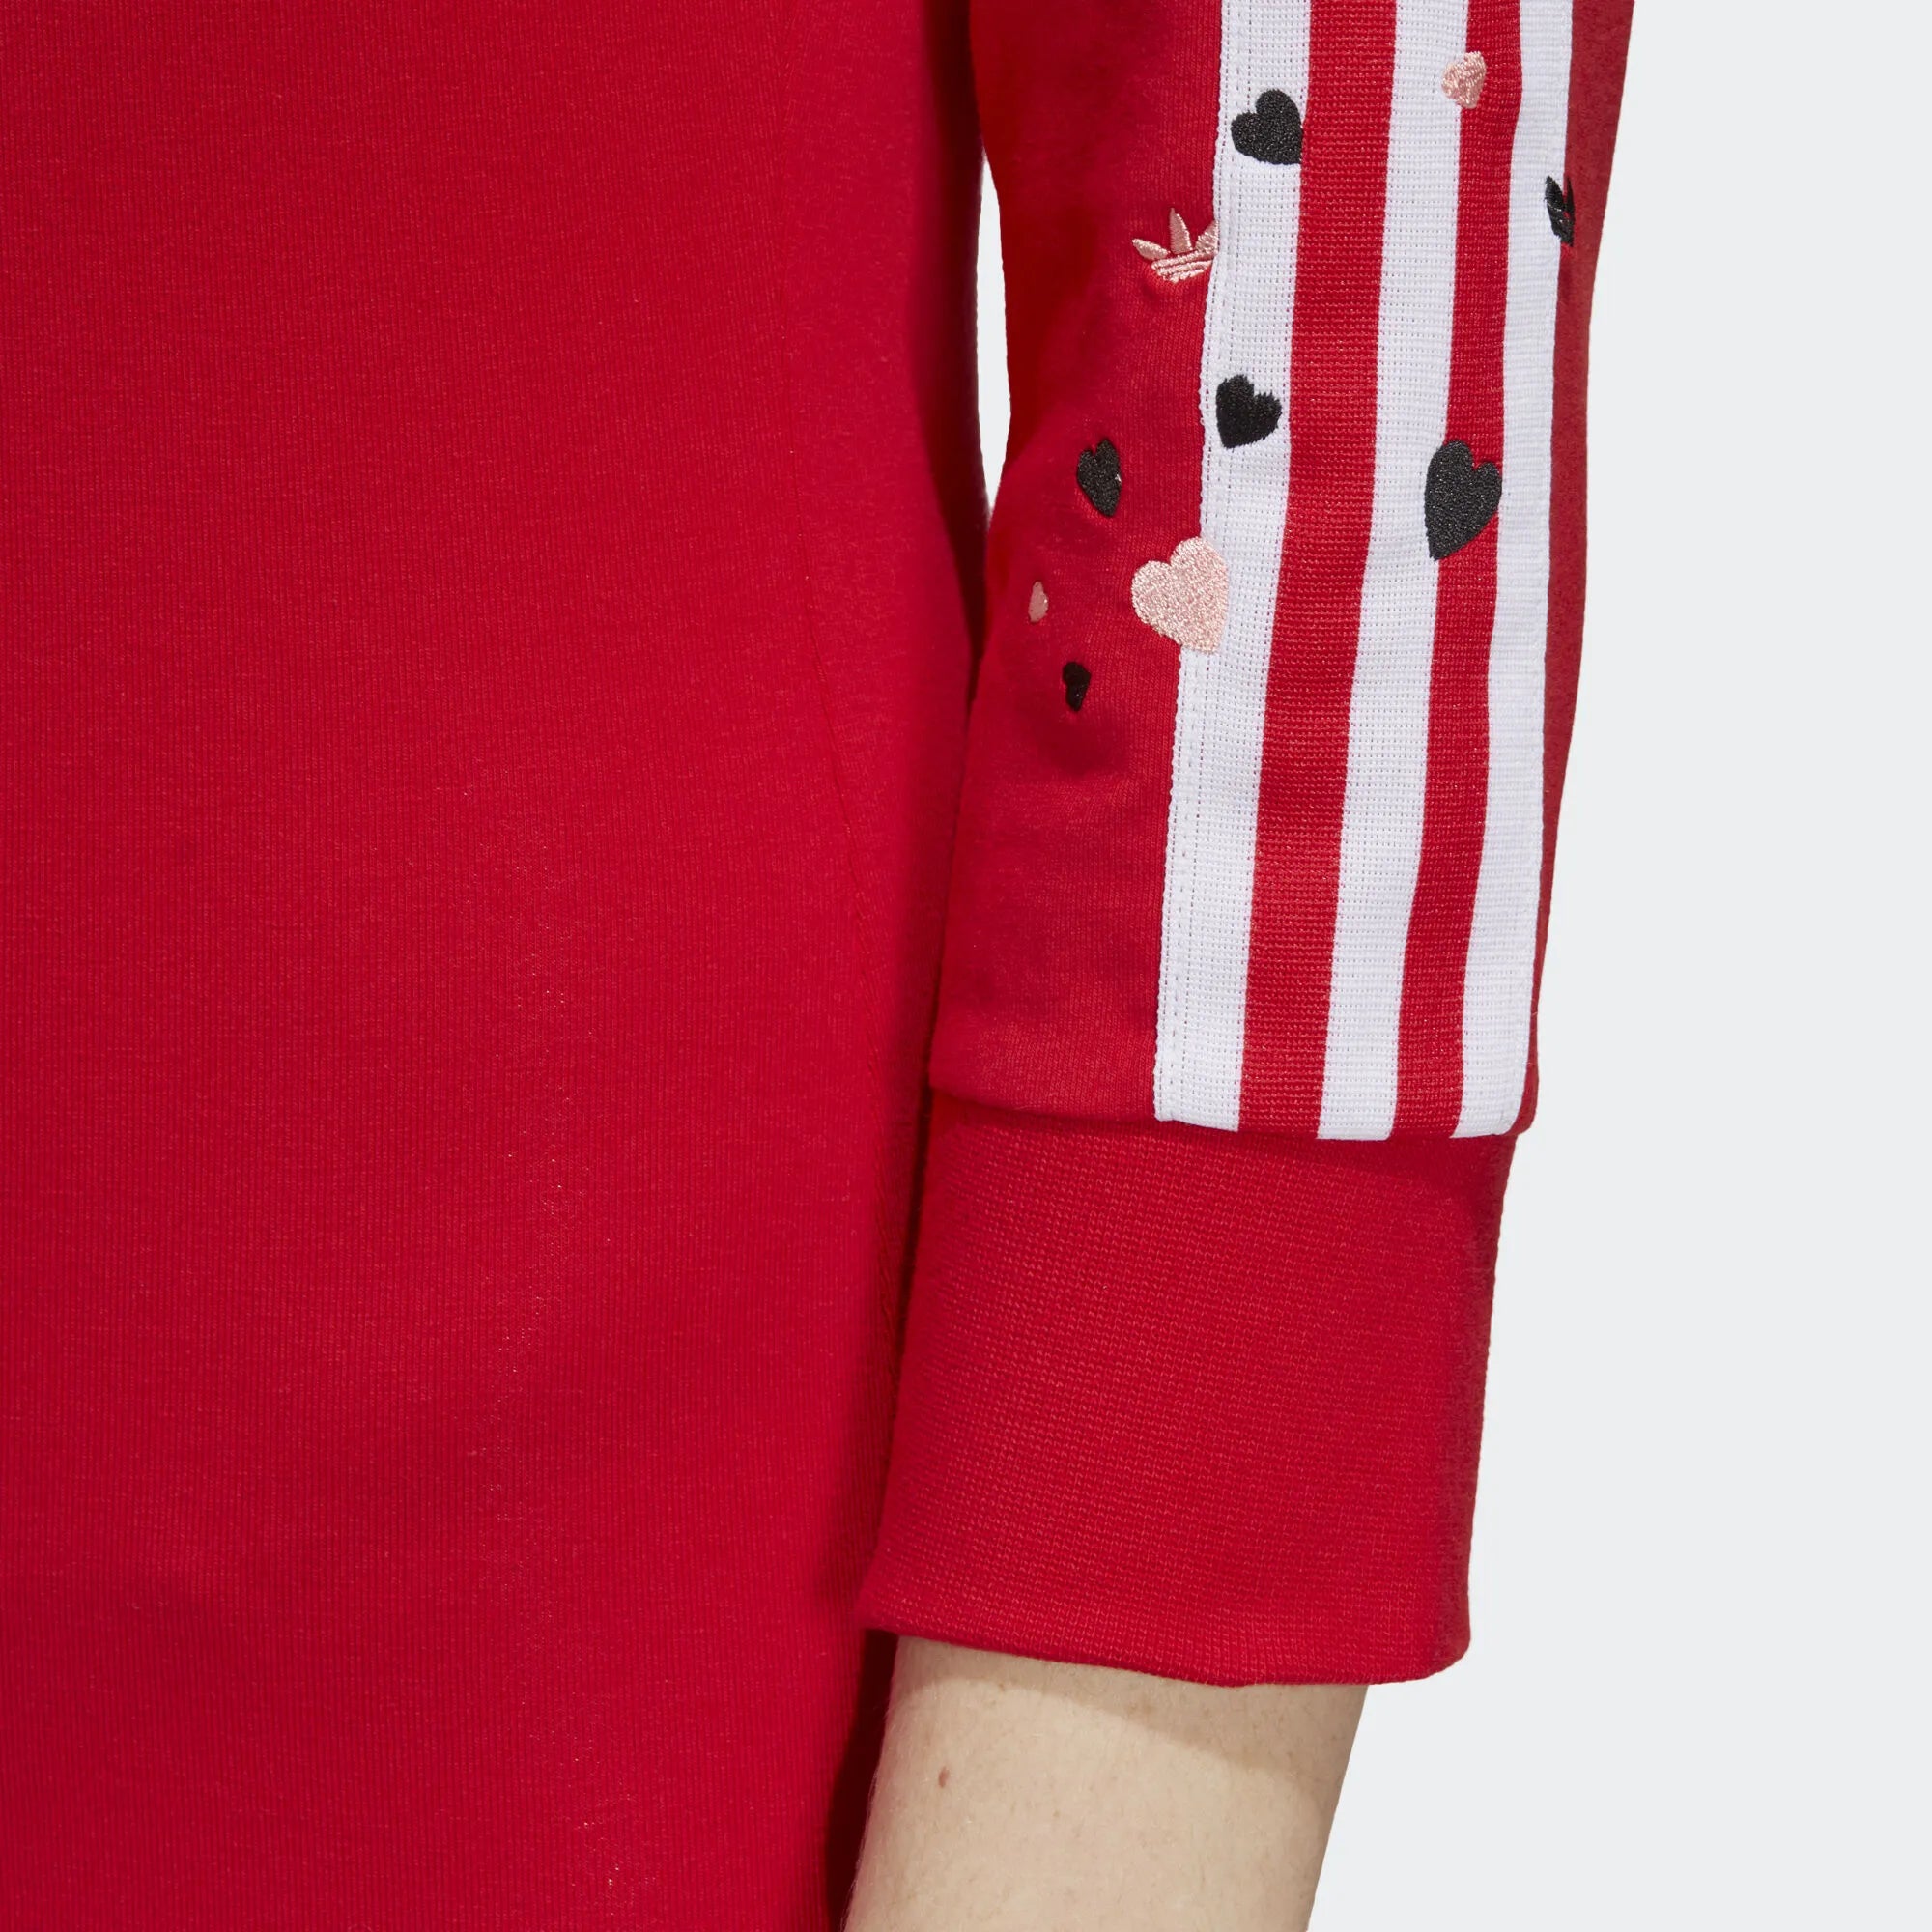 tradesports.co.uk adidas Originals Women's 3 Stripes Dress - Red